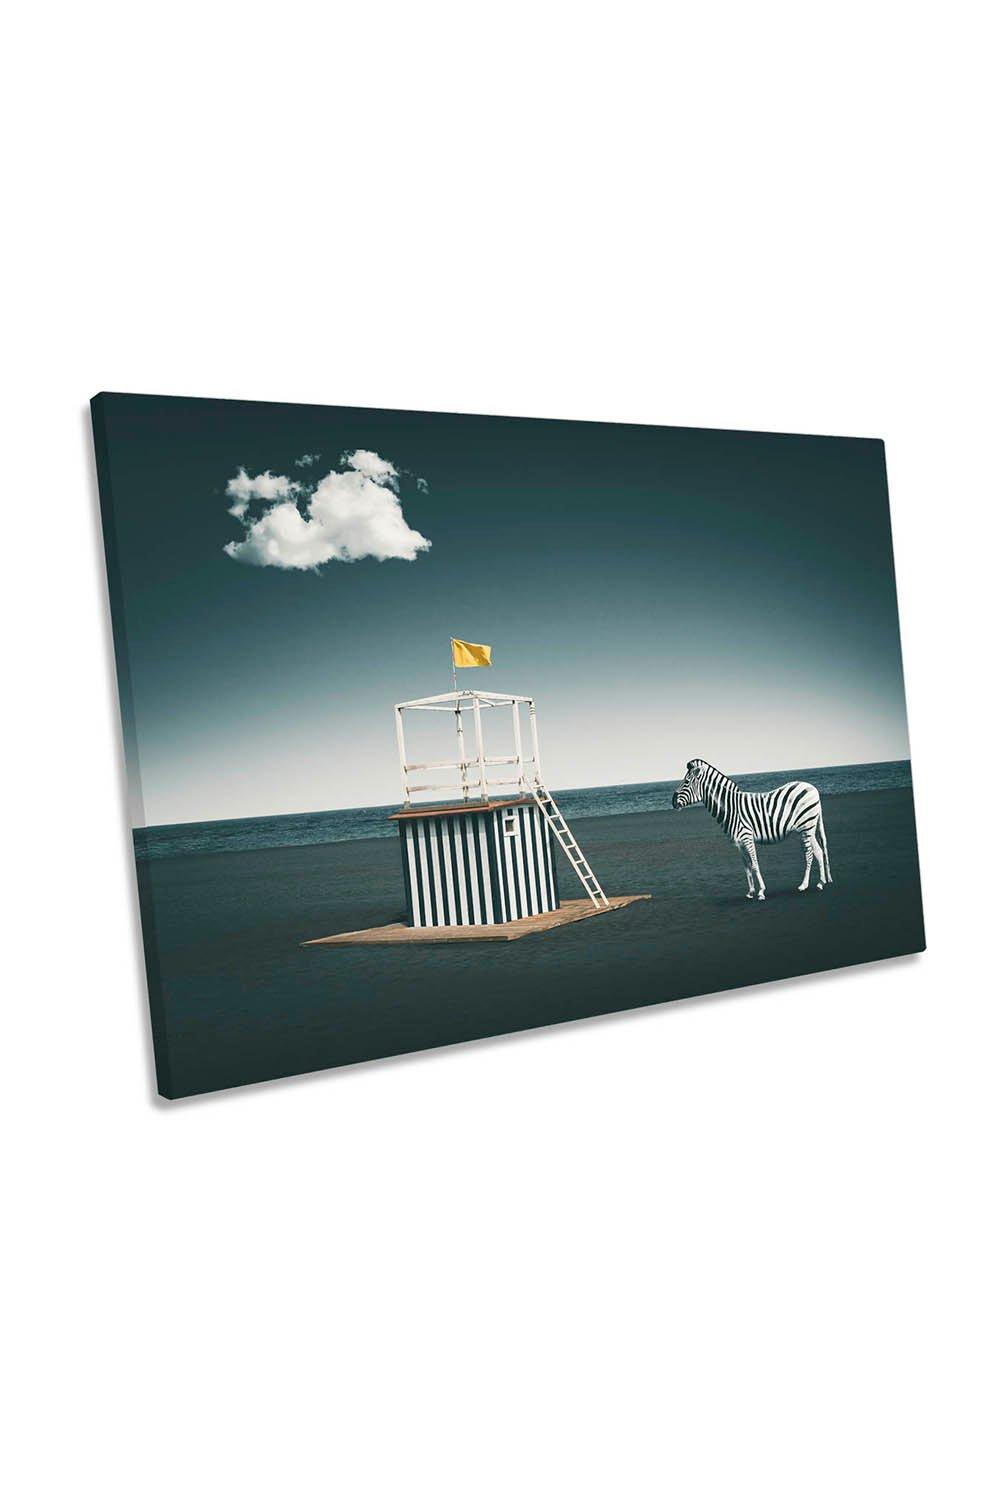 Zebra Style Beach Lifeguard Modern Canvas Wall Art Picture Print